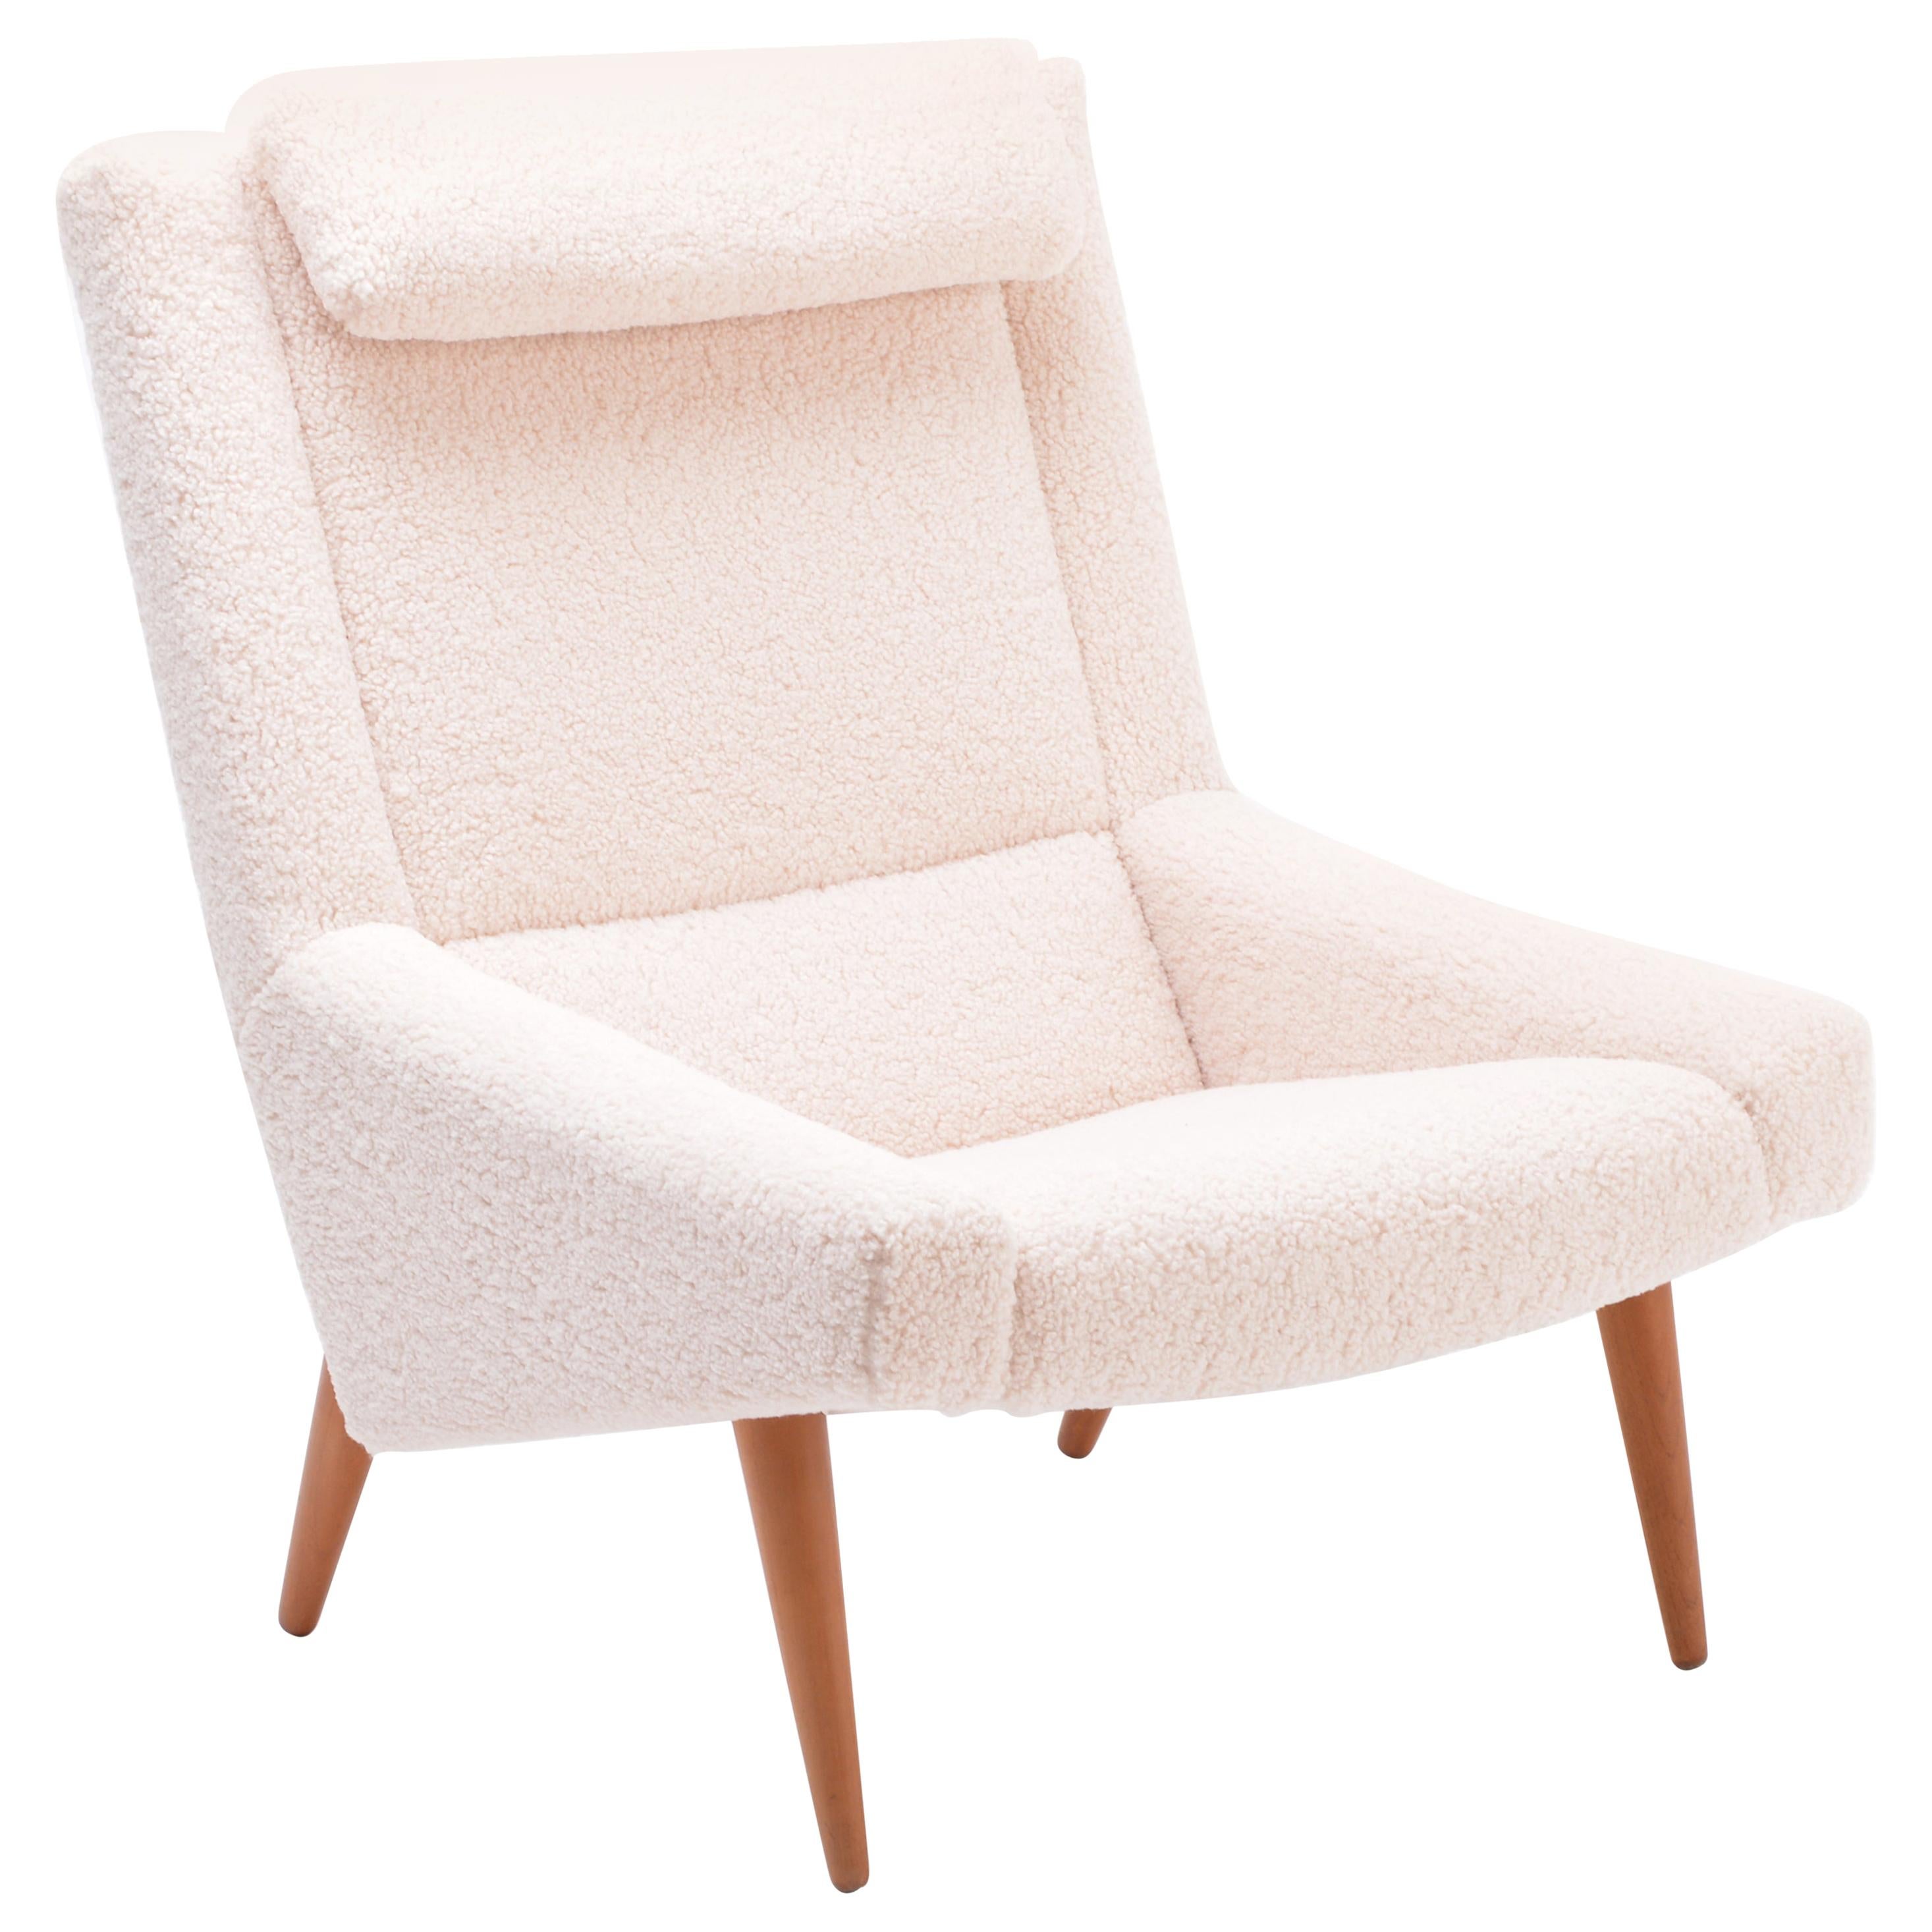 Mid-Century Modern Highback Lounge Chair in Teddy Fur by Illum Wikkels�ø